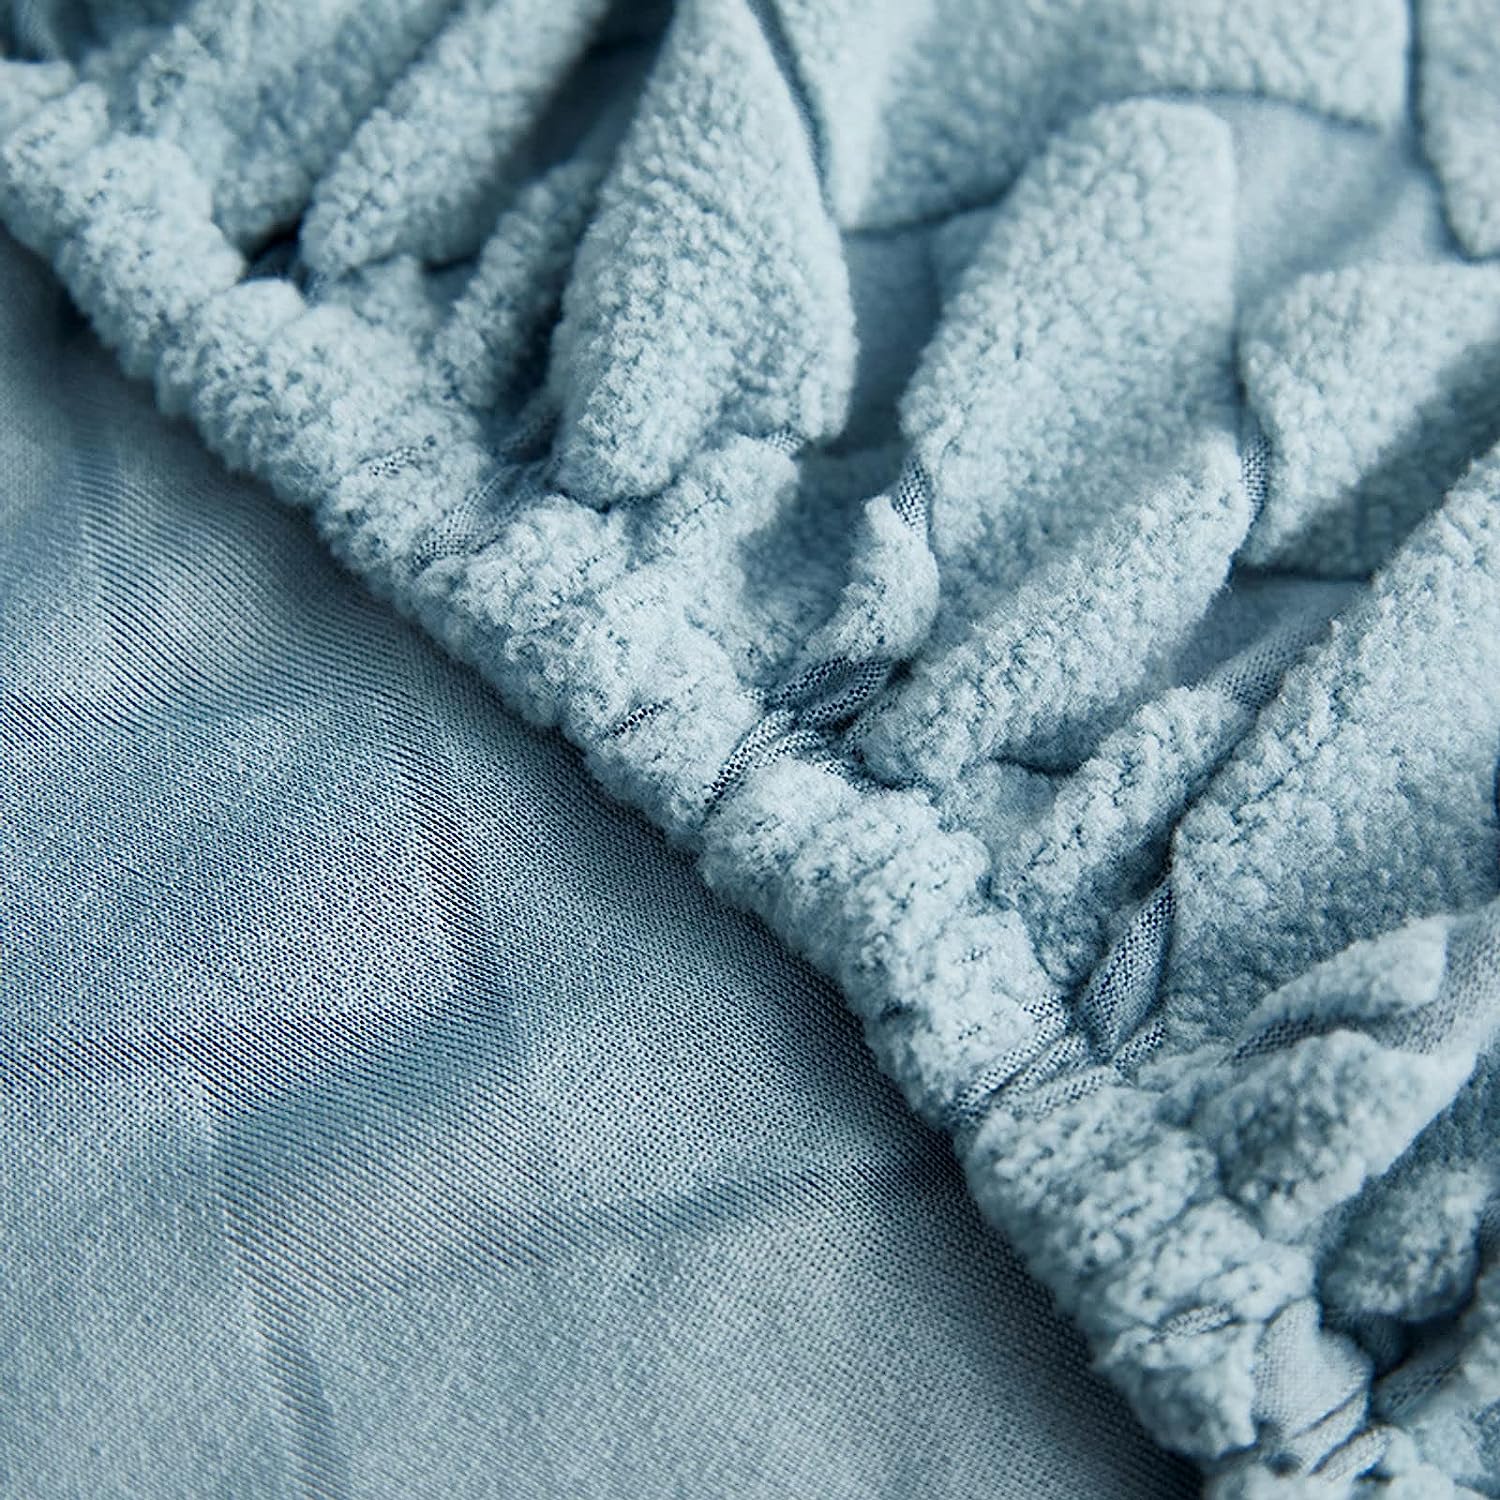 Sofa Cushion Cover - Powder Blue - Soft Elastic Jacquard Weave